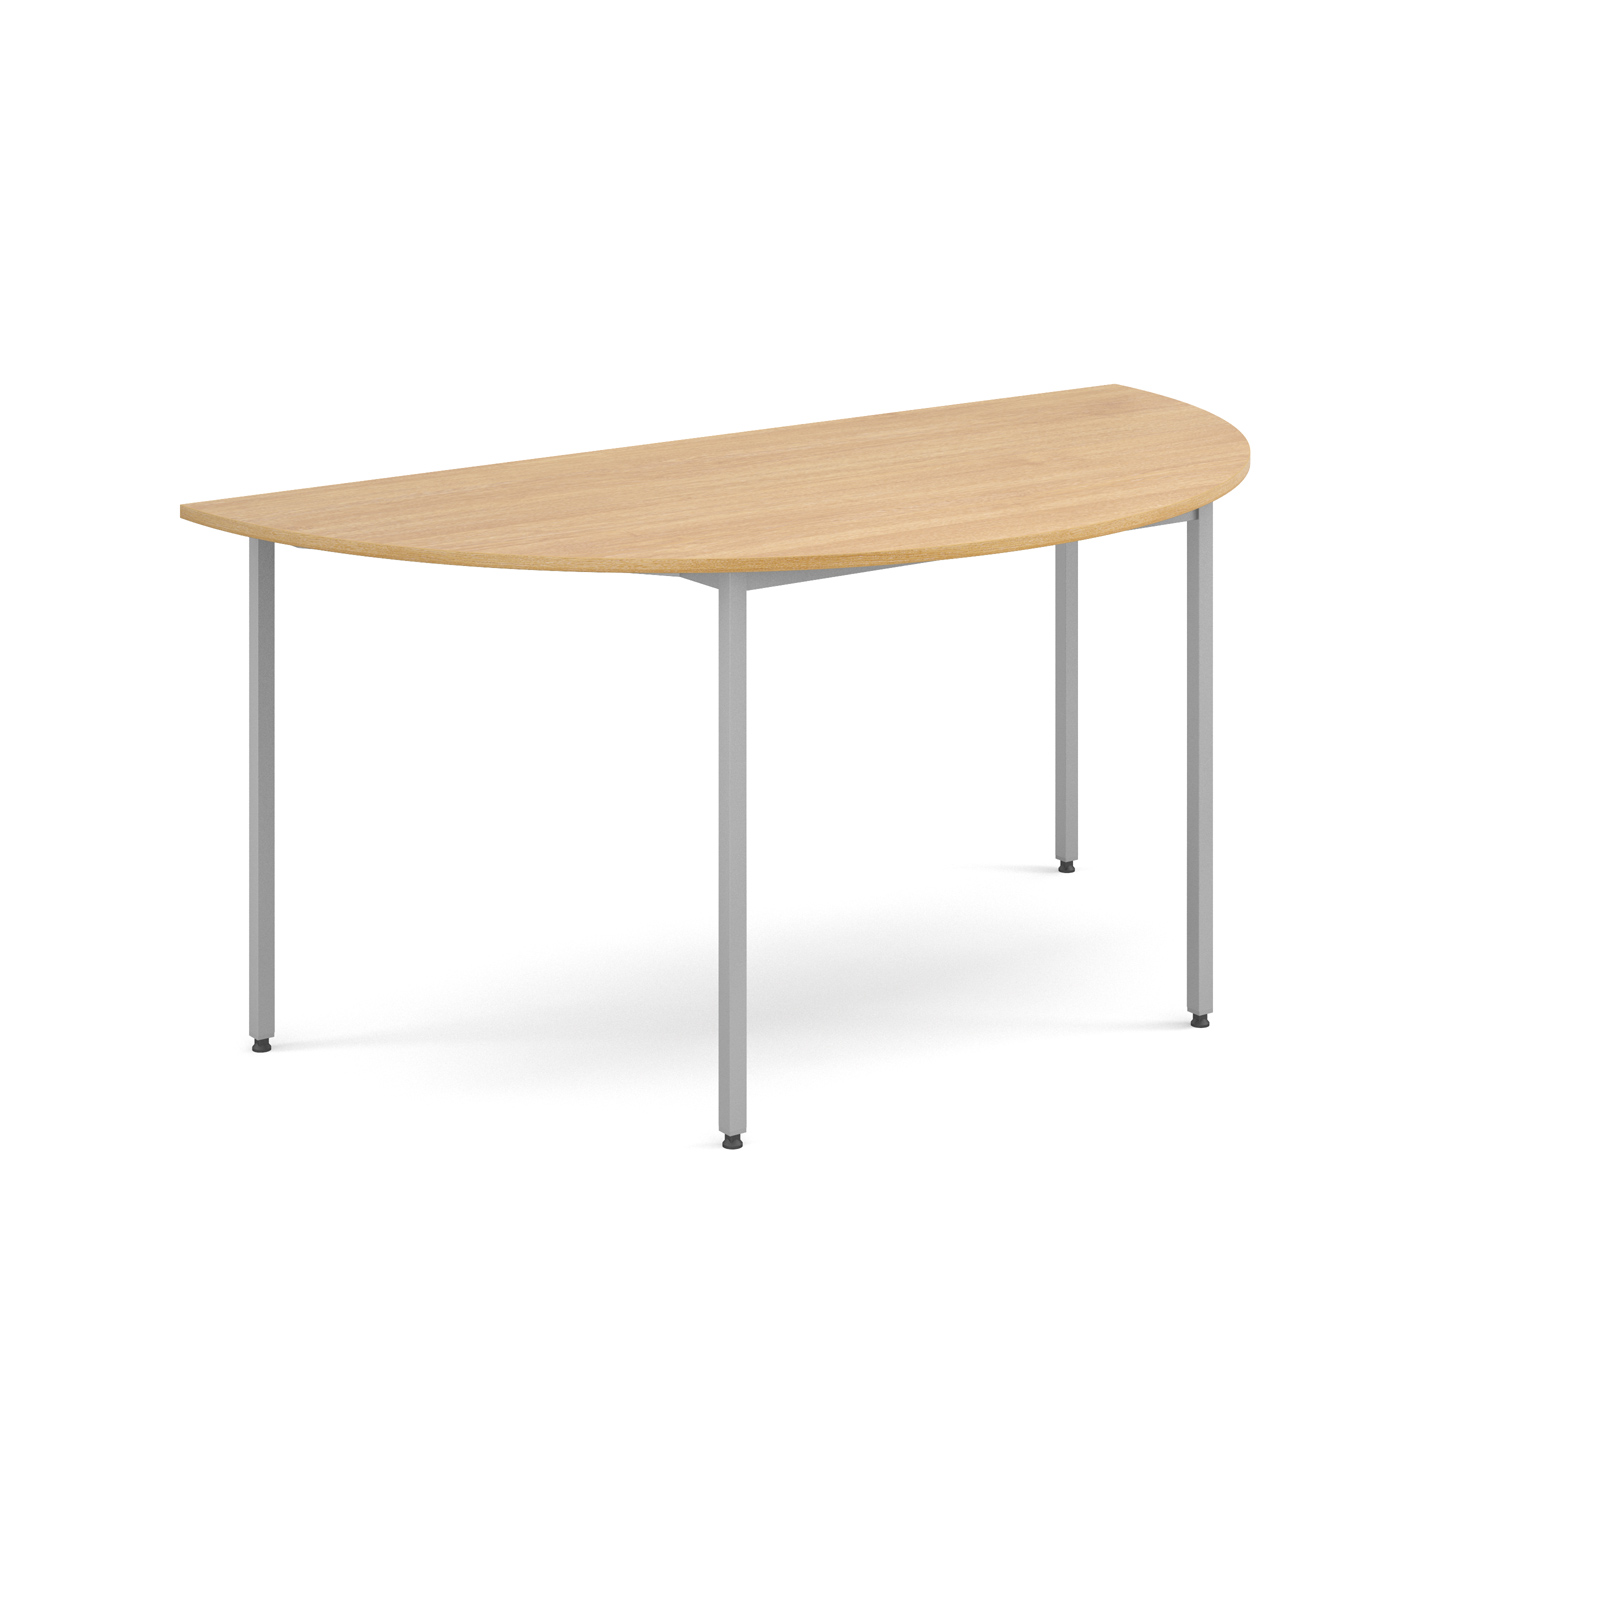 Semi circular flexi table with silver frame 1600mm x 800mm - oak